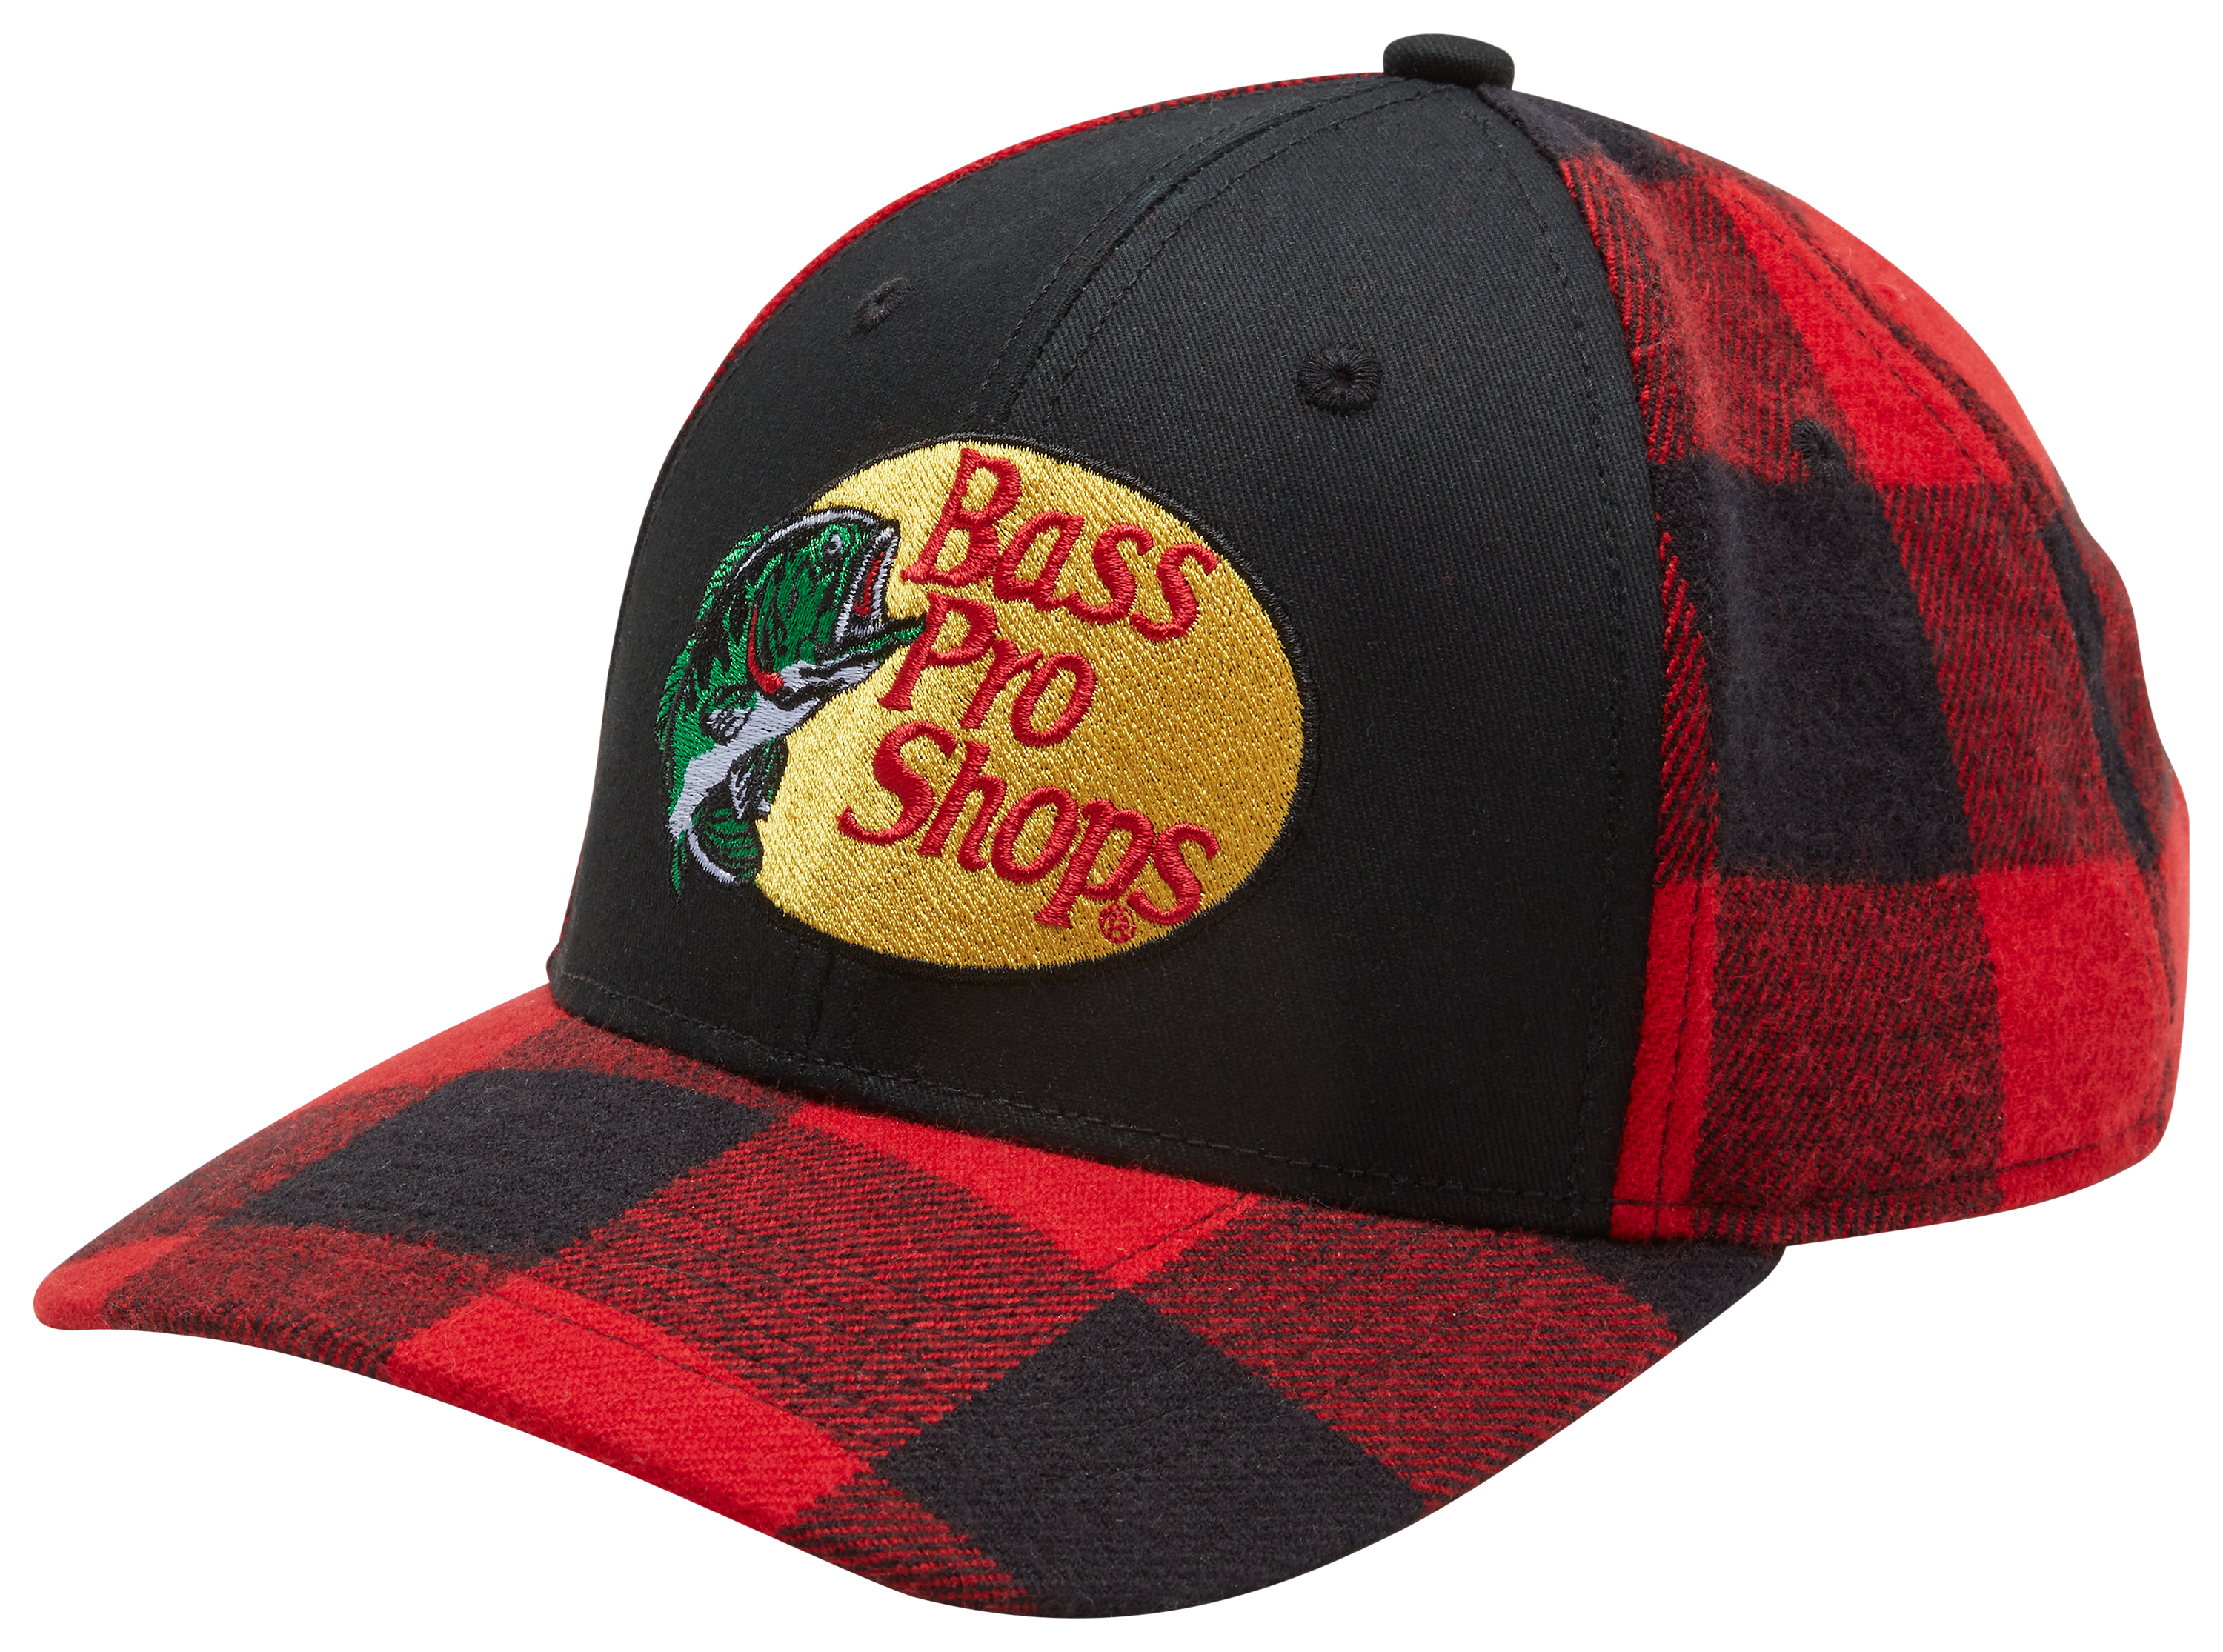 Bass Pro Shops Flannel Buffalo Plaid Cap